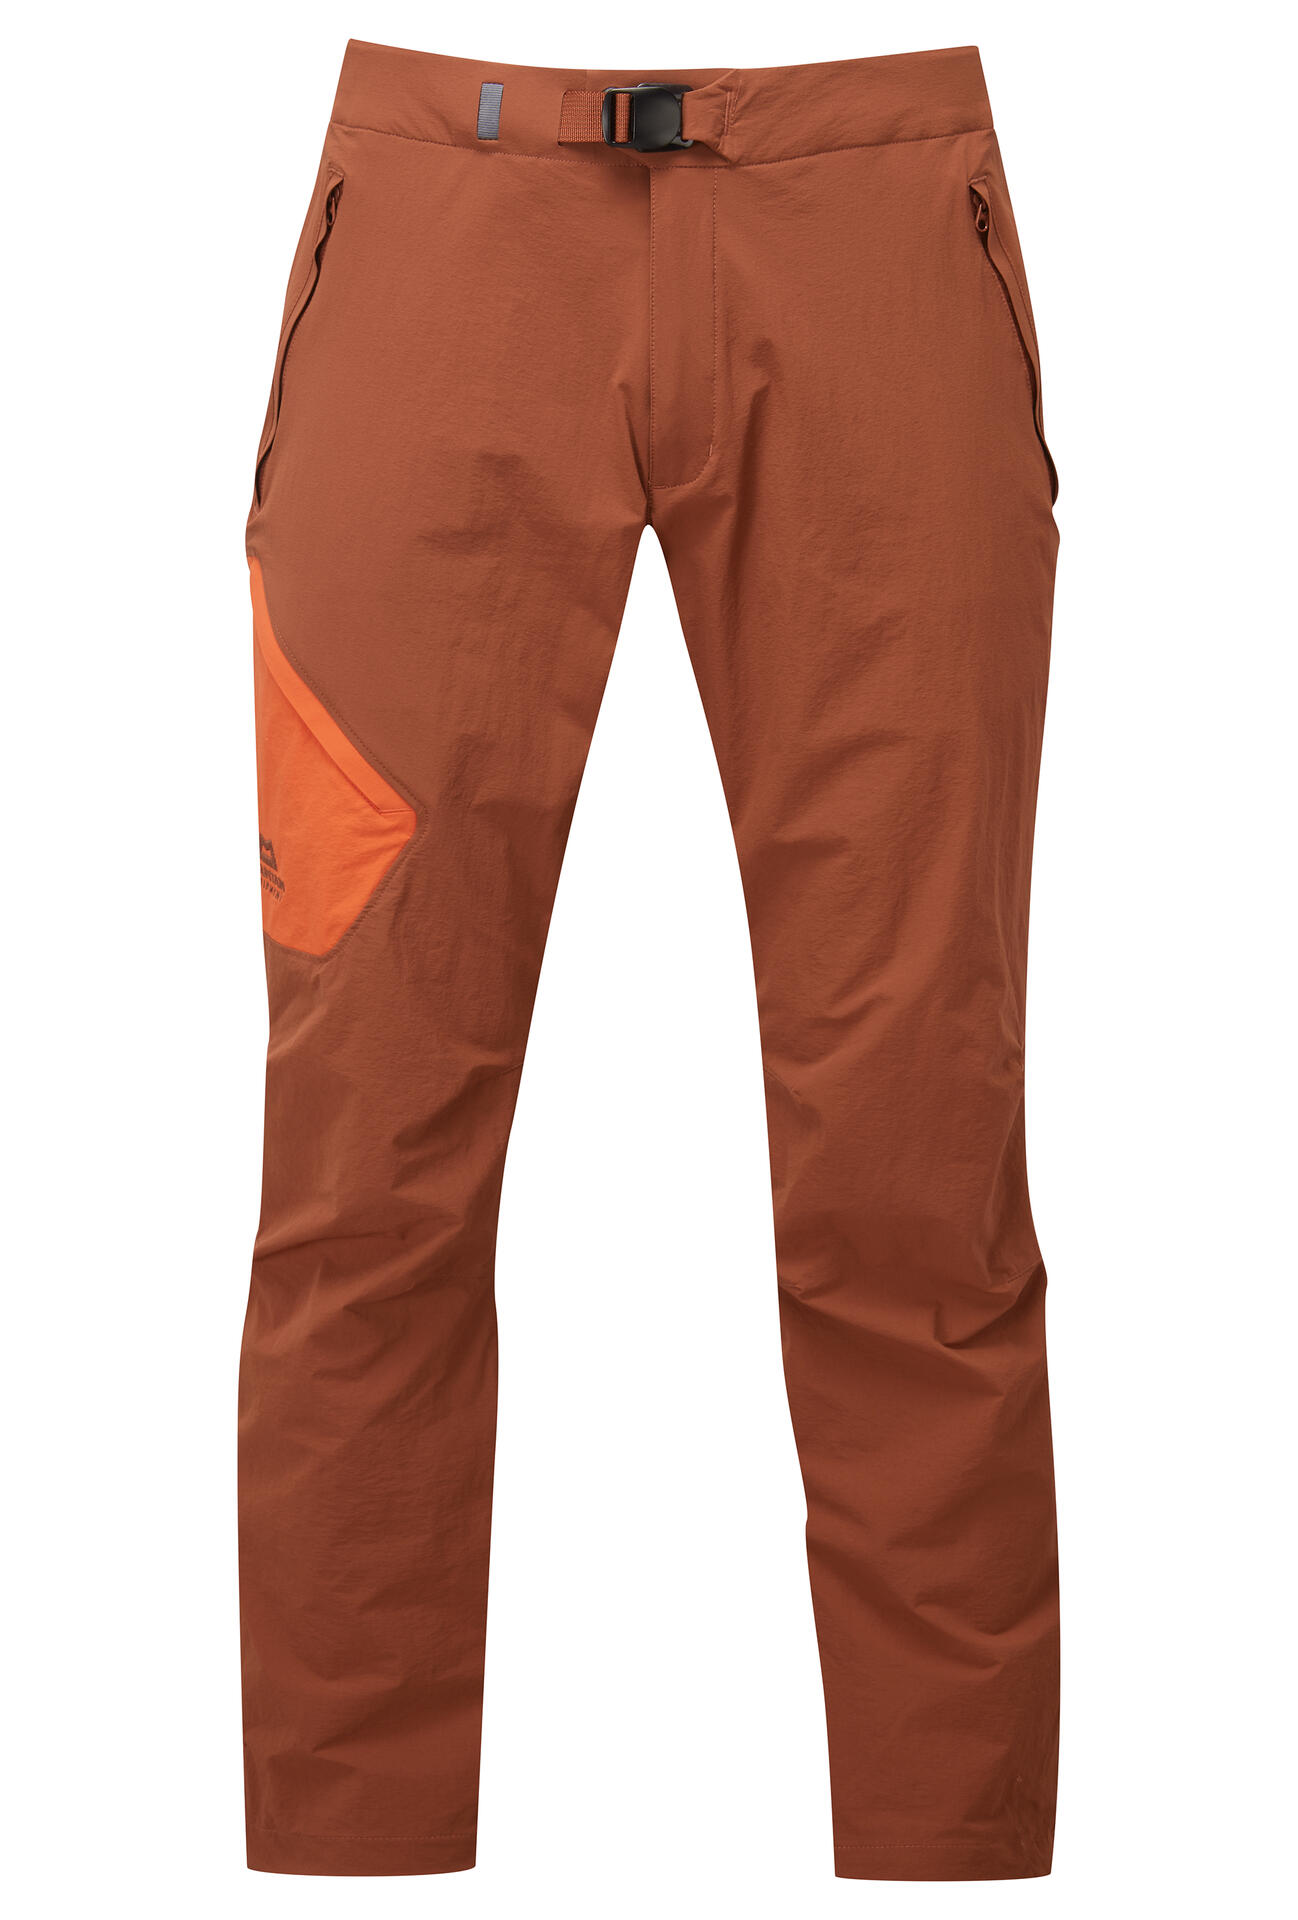 Mountain Equipment Comici Pant (Ac) Men'S - běžná délka Barva: Burnt Henna/Cardinal Orange, Velikost: L